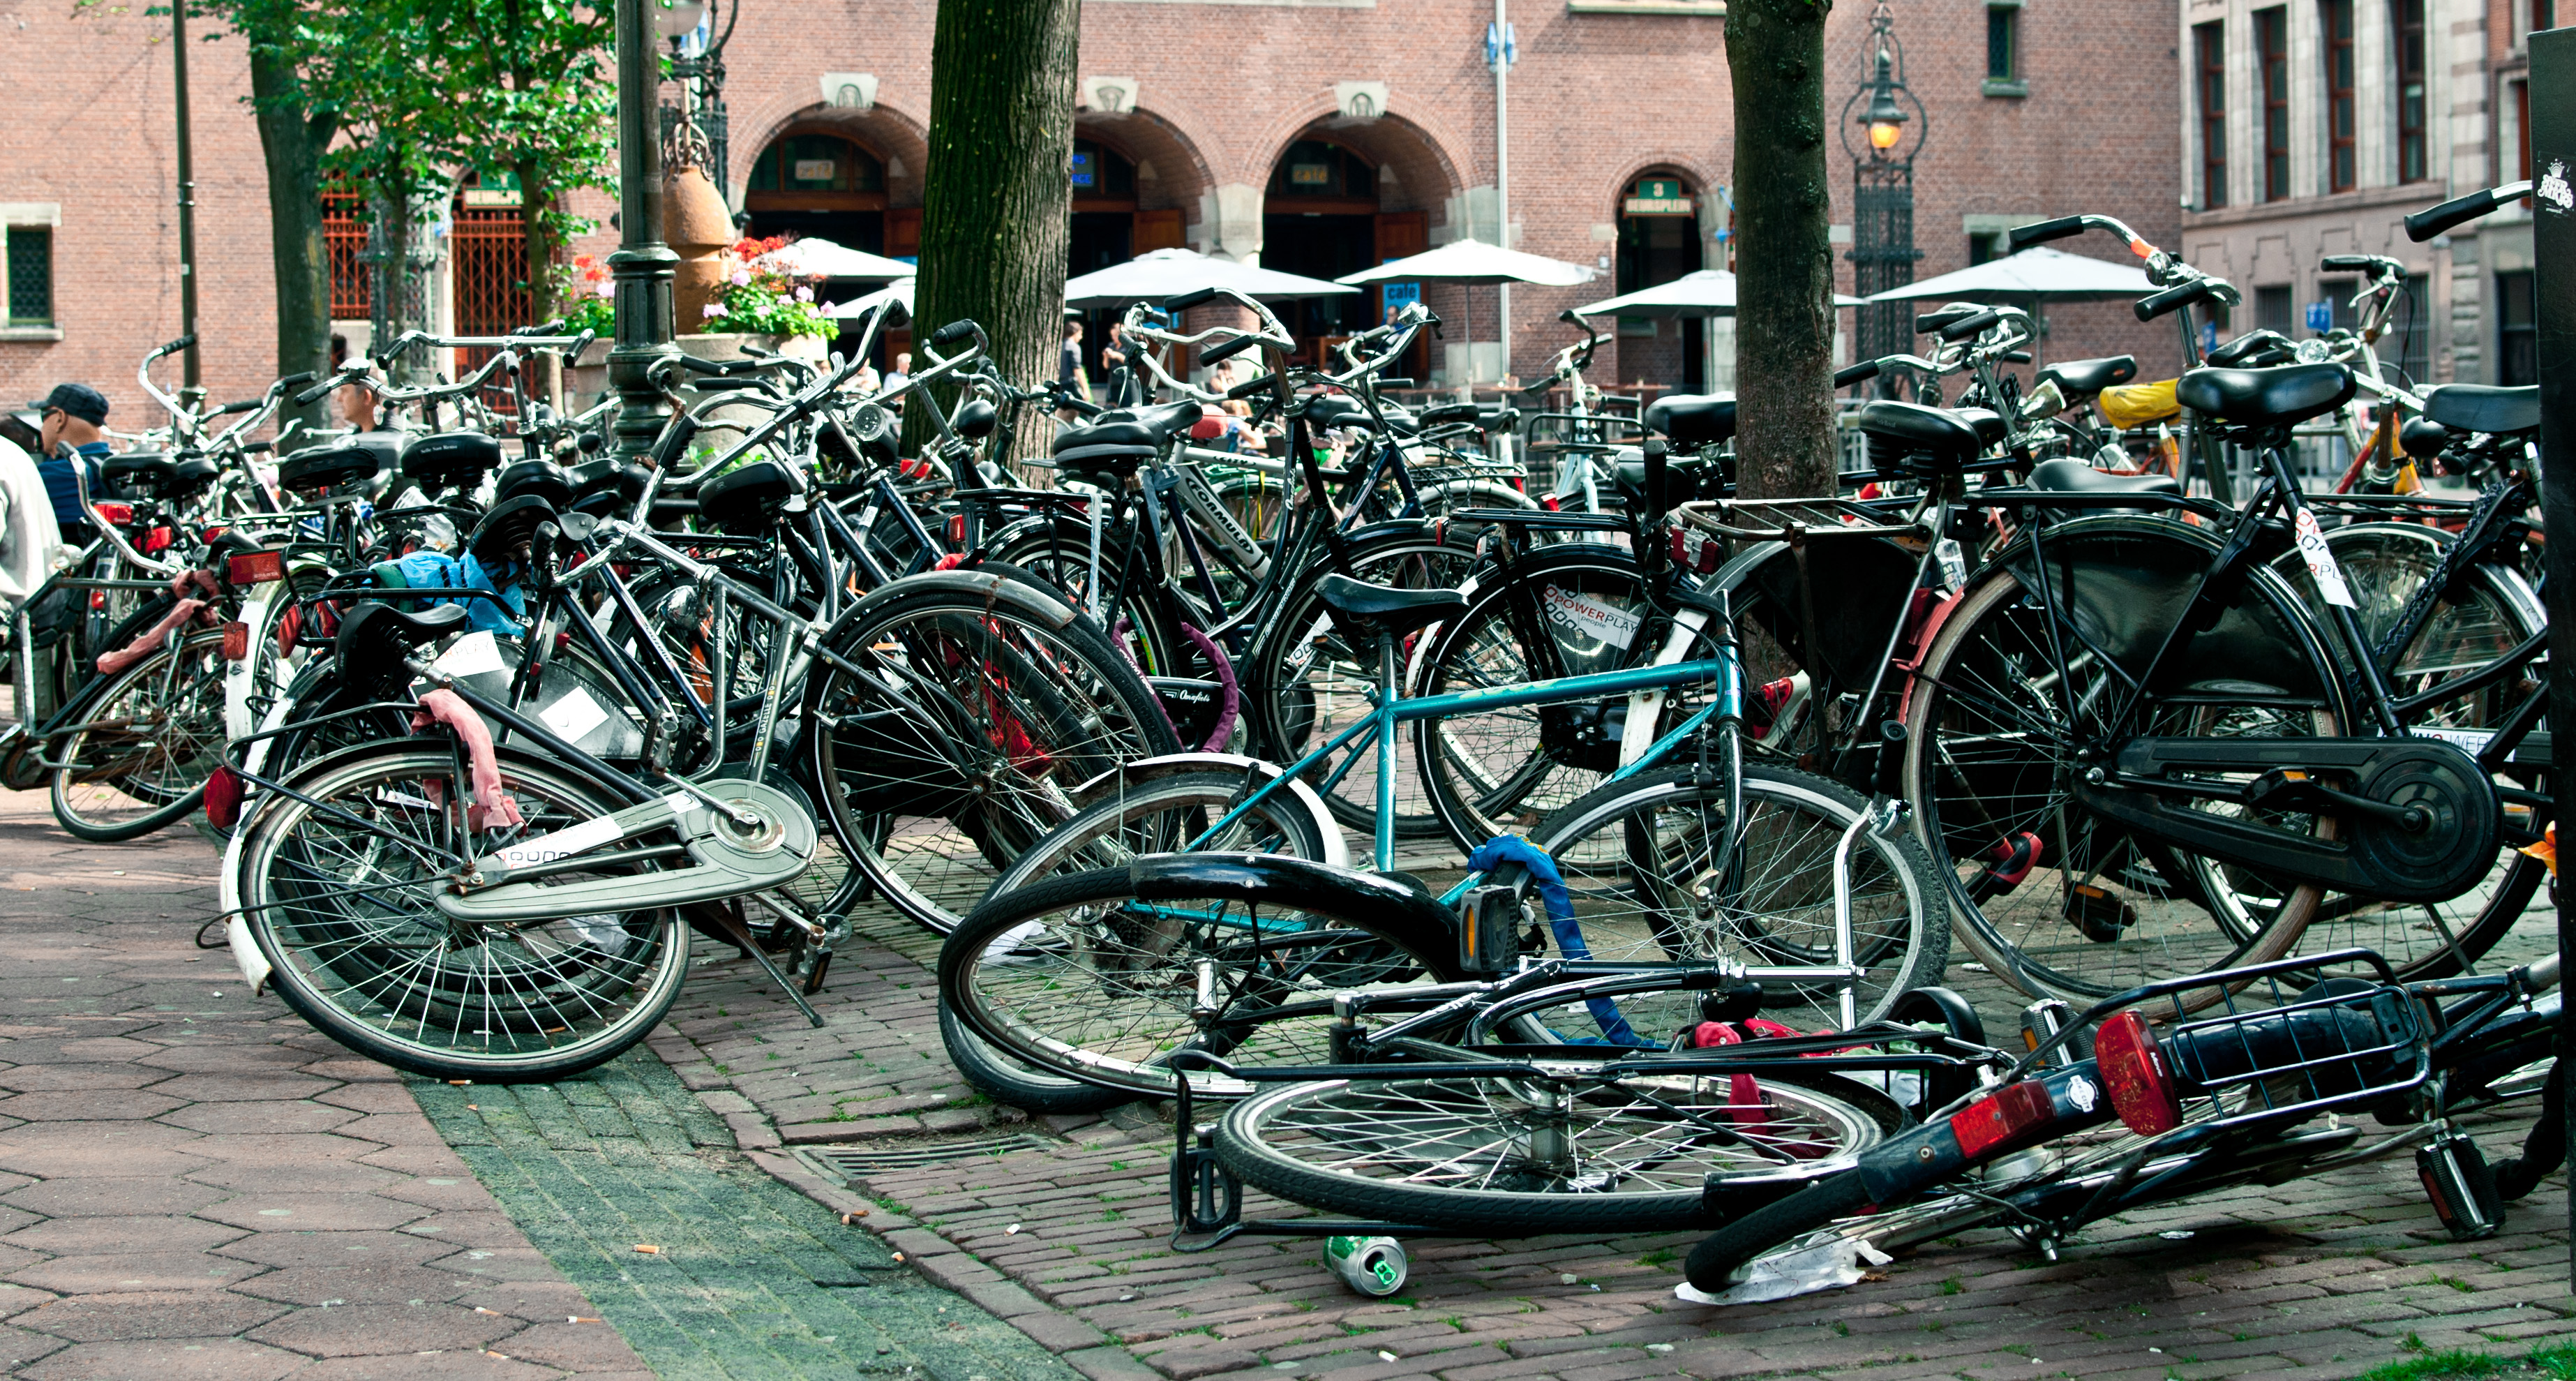 Bikes_in_Amsterdam_(6073899154).jpg